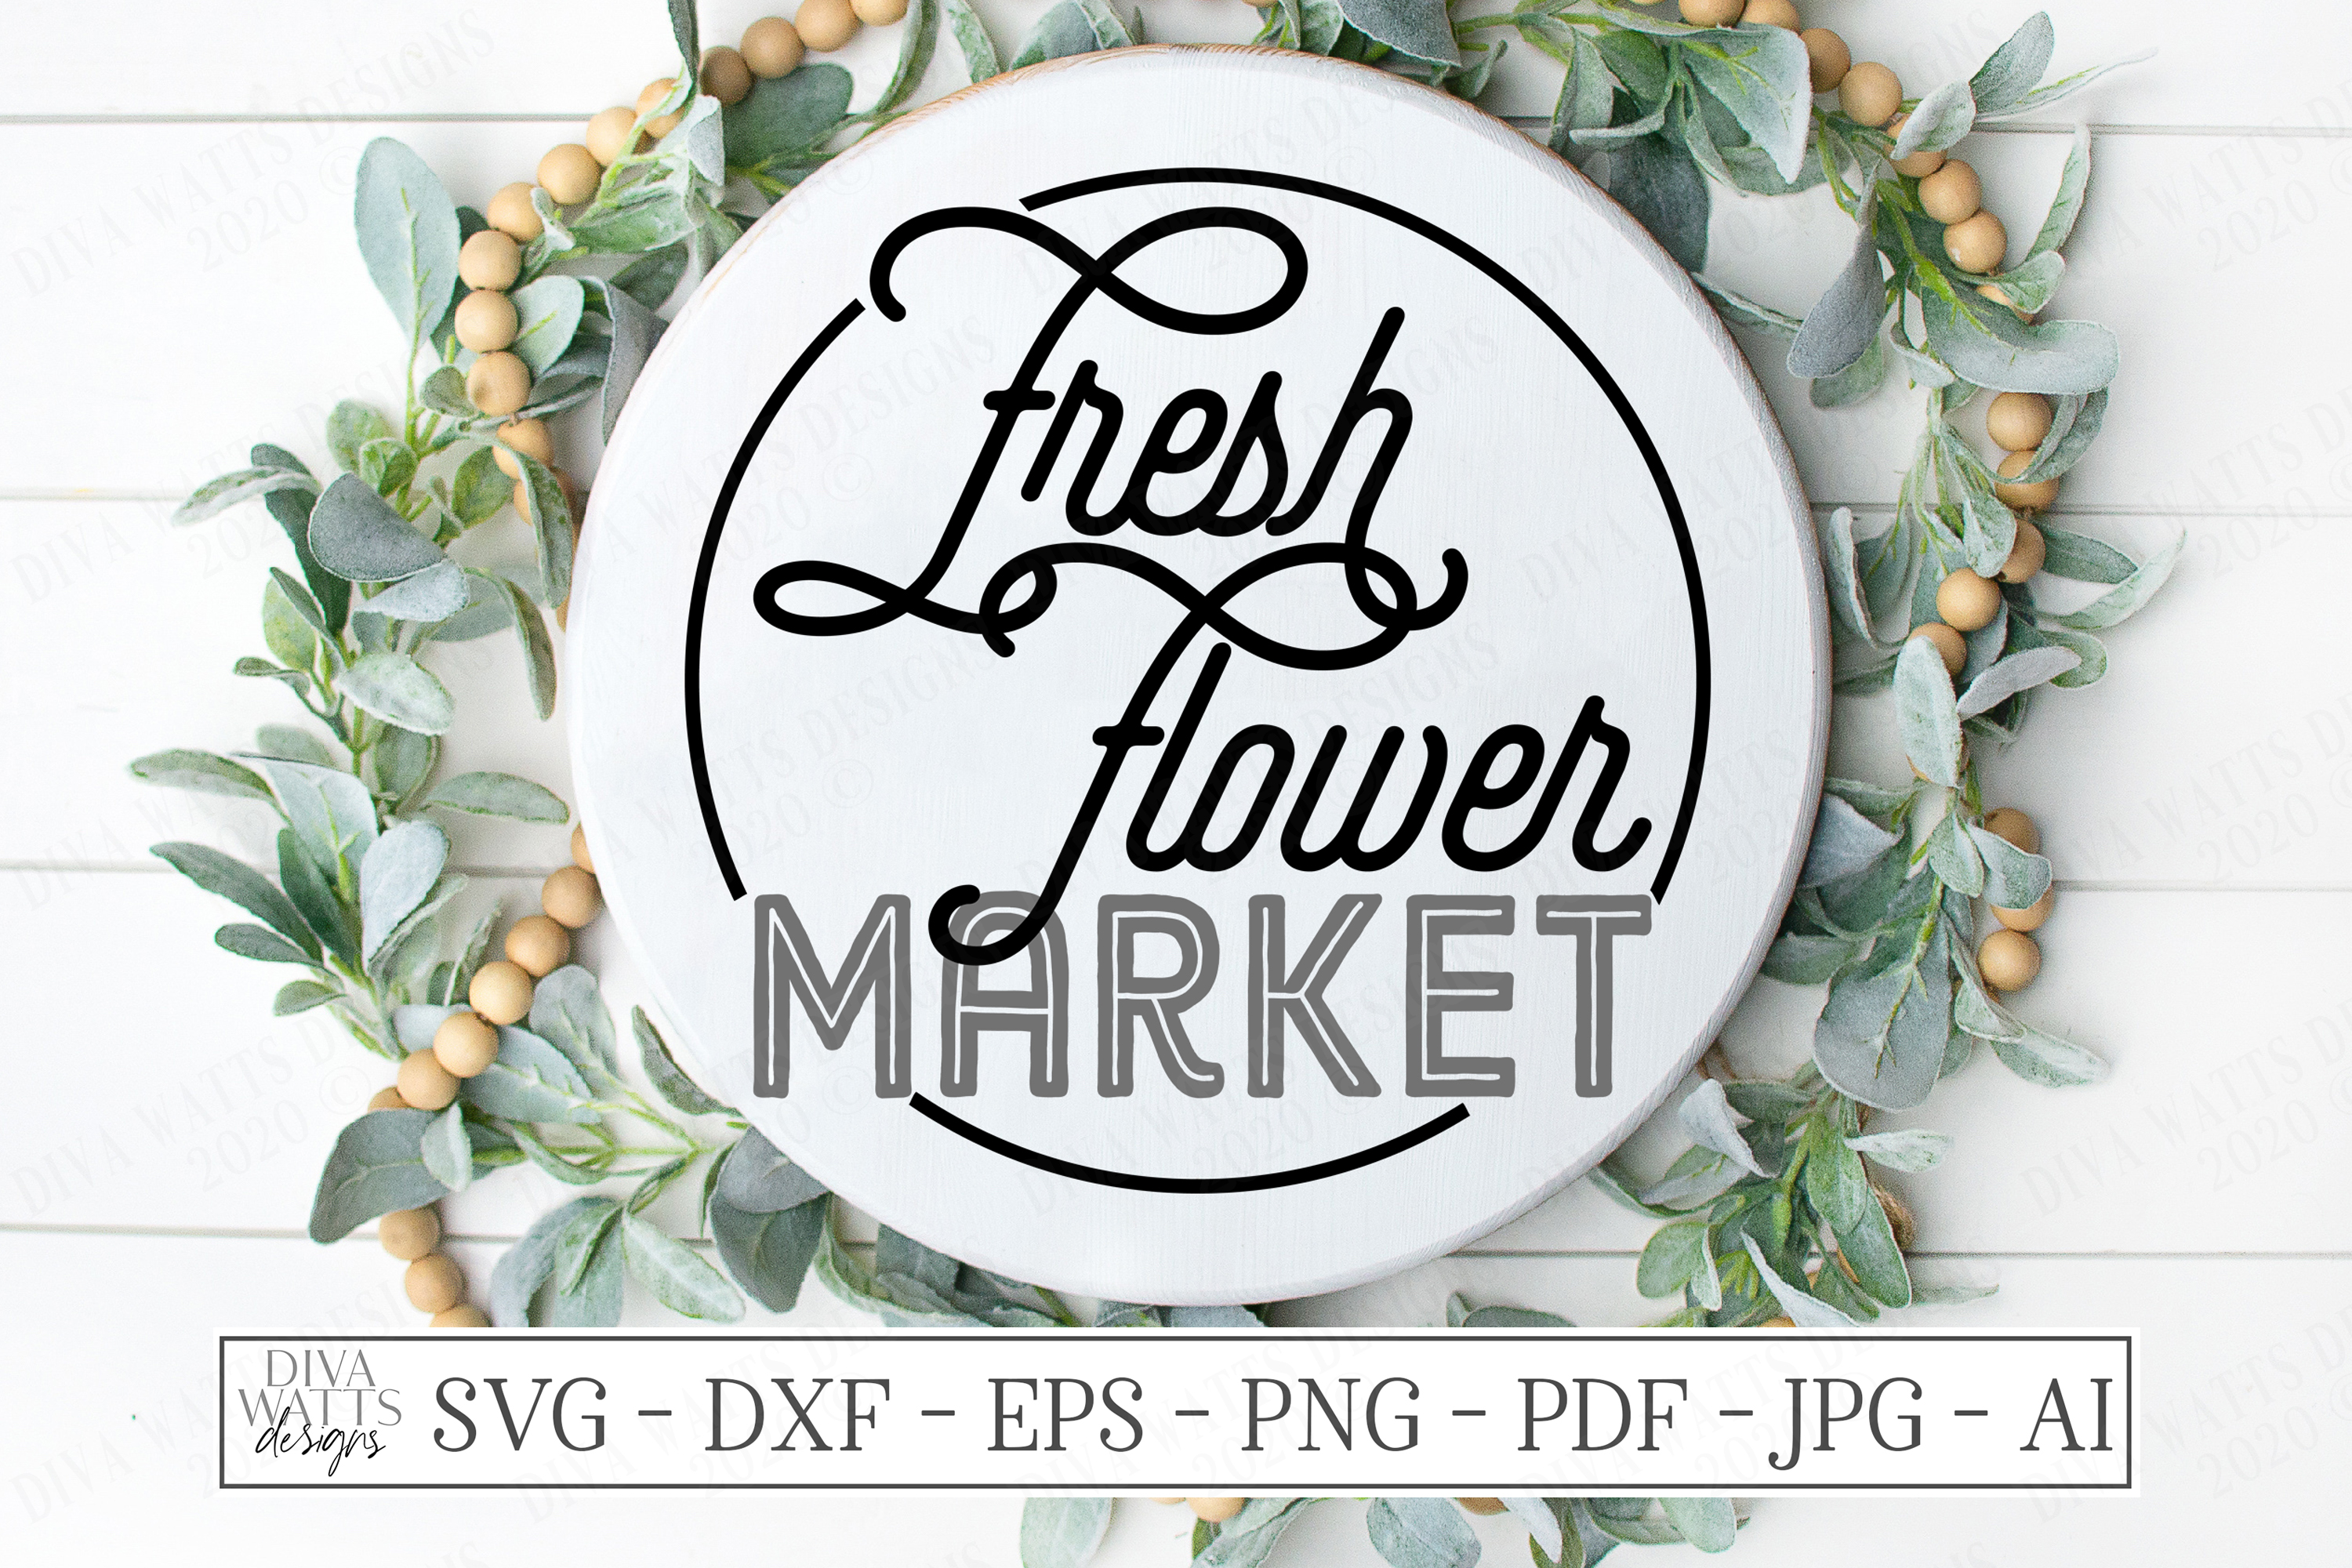 Fresh Flower Market - Monoline Retro Vintage Sign SVG DXF